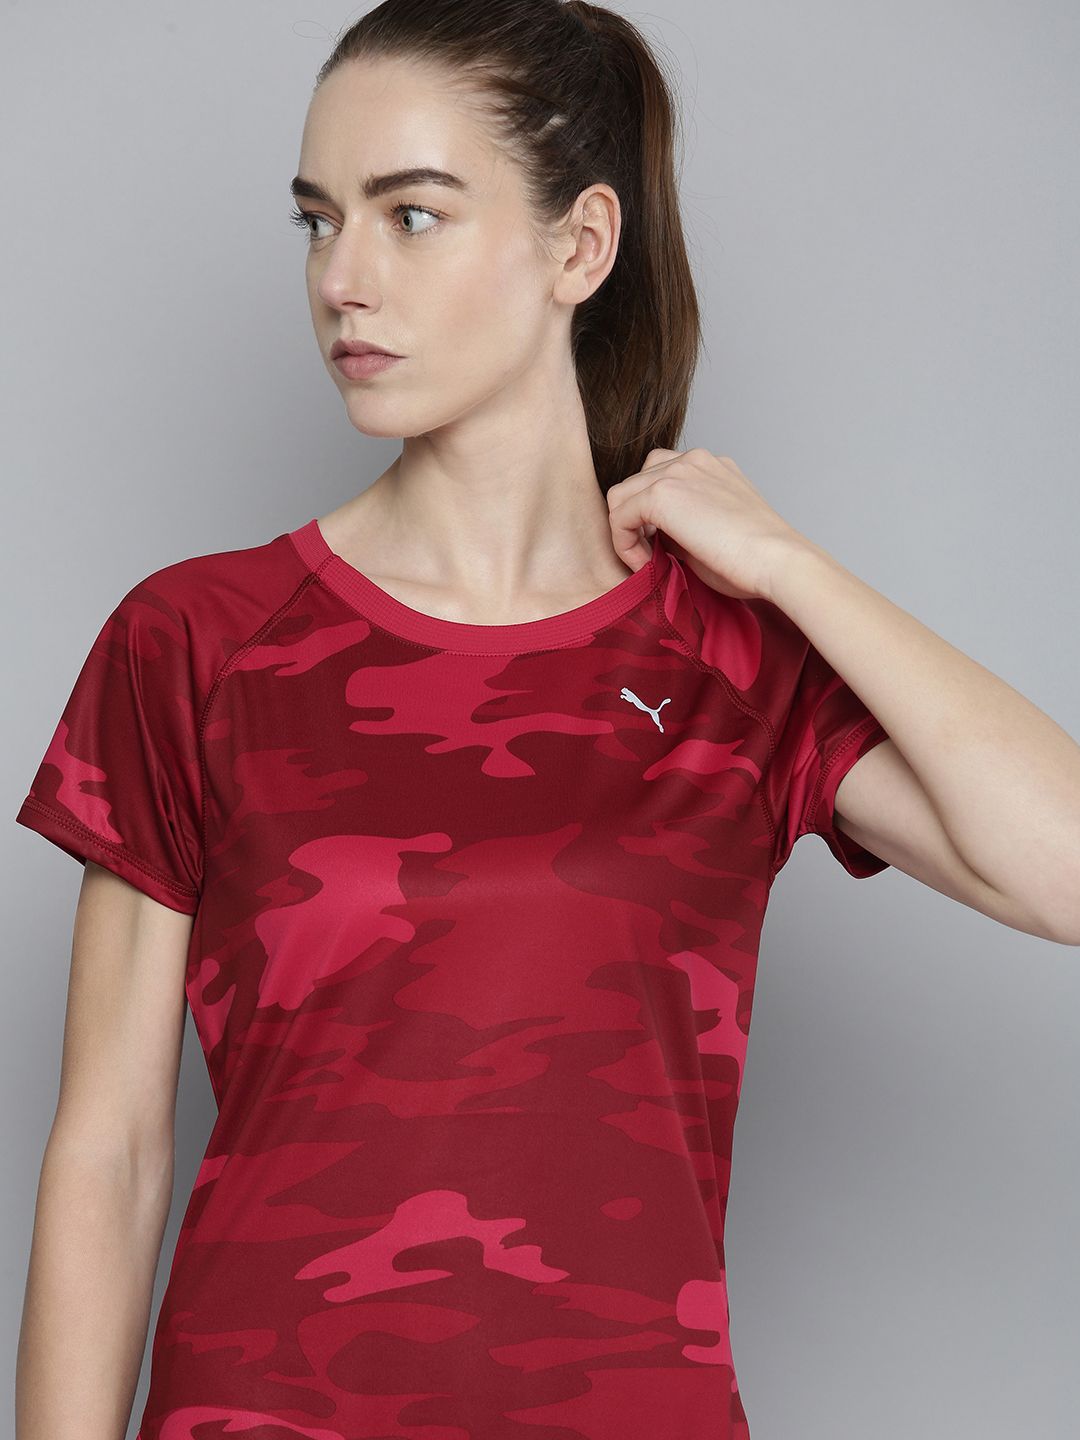 Puma Women Red RUN Graphic Camouflage Printed Running T-shirt Price in India